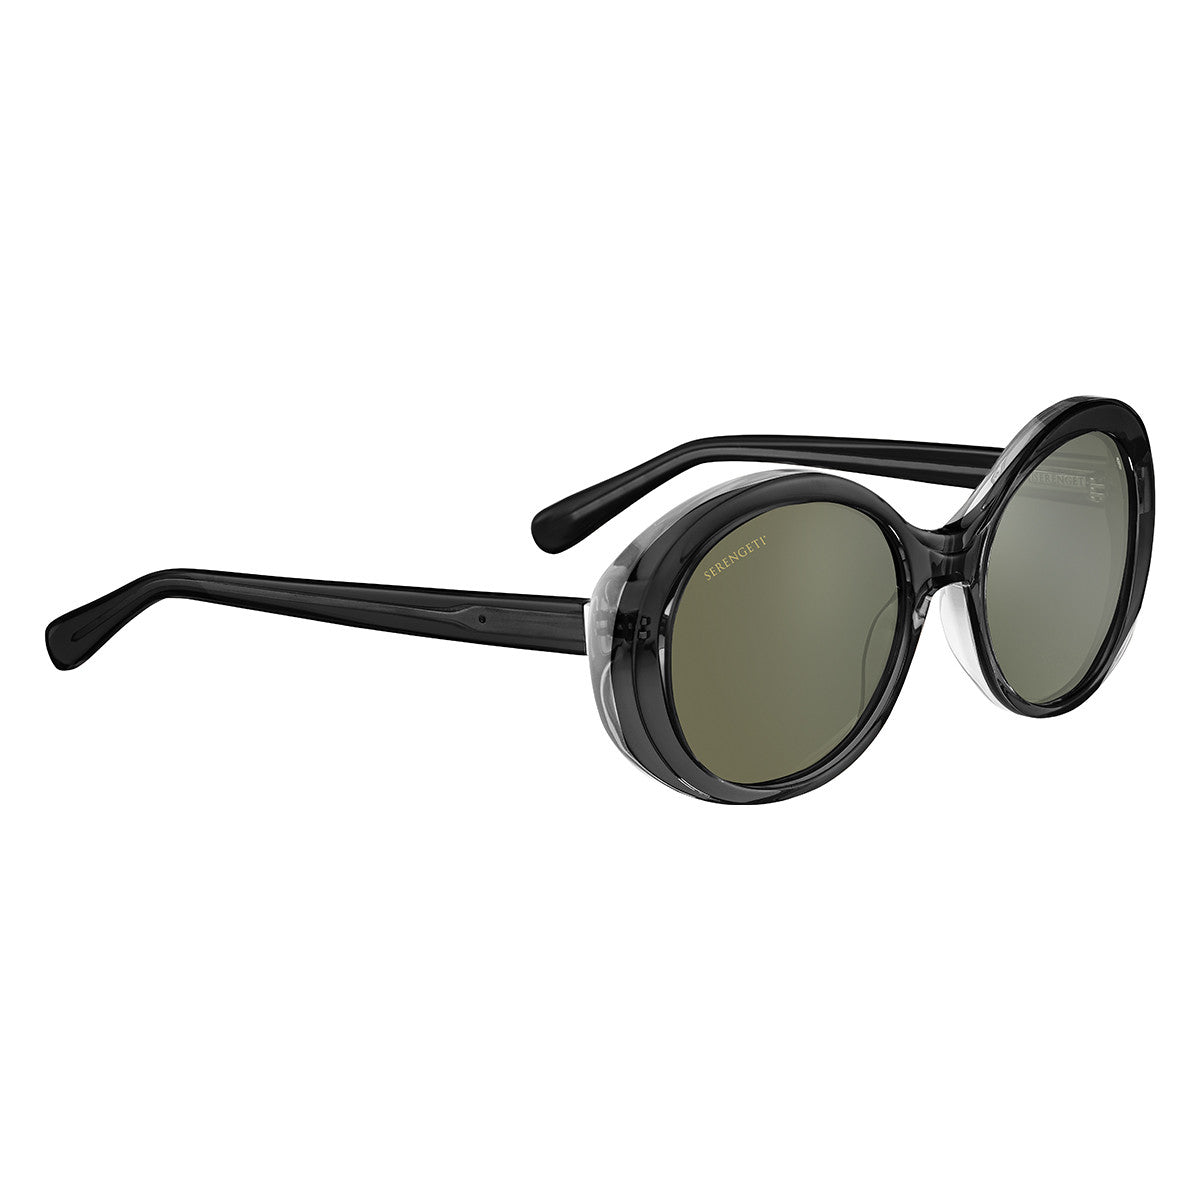 Serengeti Bacall Sunglasses  Shiny Black Transparent Layer Small, Medium